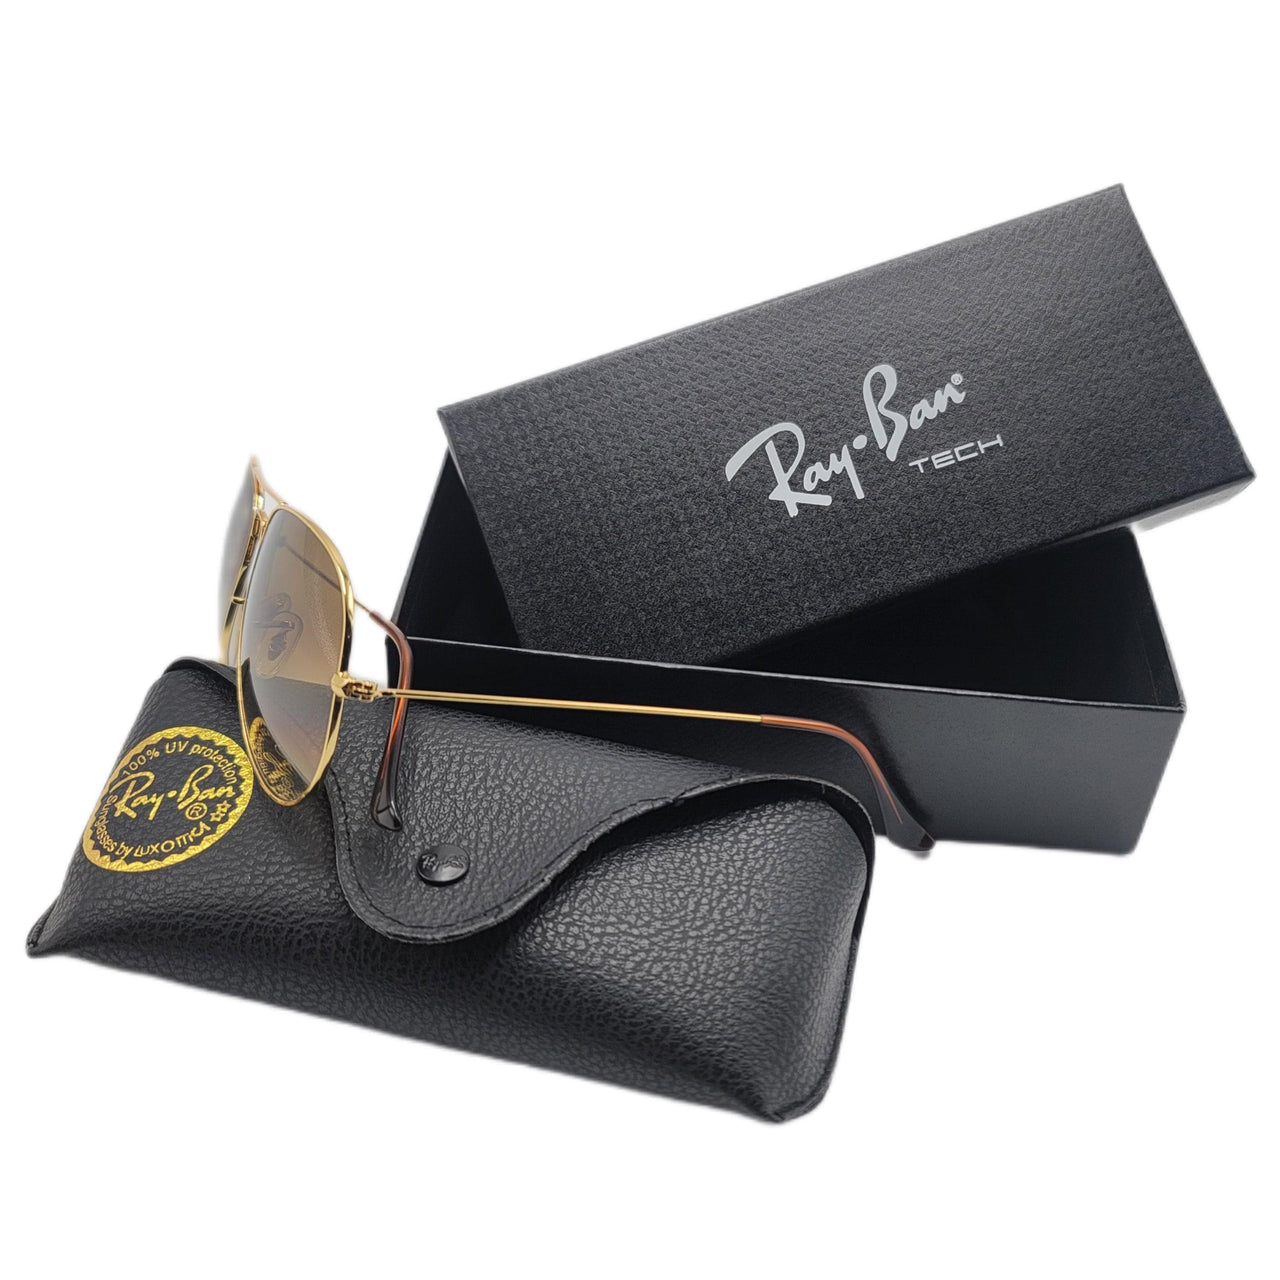 The Bag Couture Sunglasses Ray Ban Aviator Sunglasses GBR